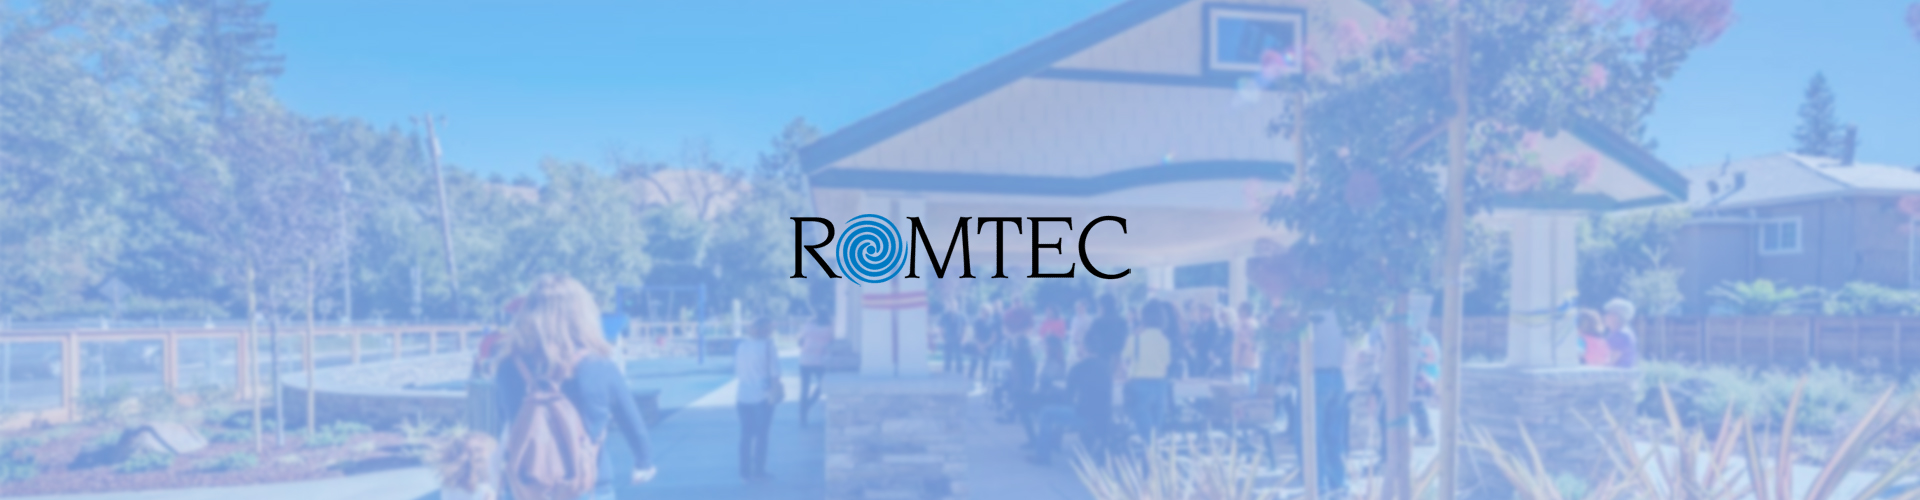 Romtec Utilities & Romtec Inc banner